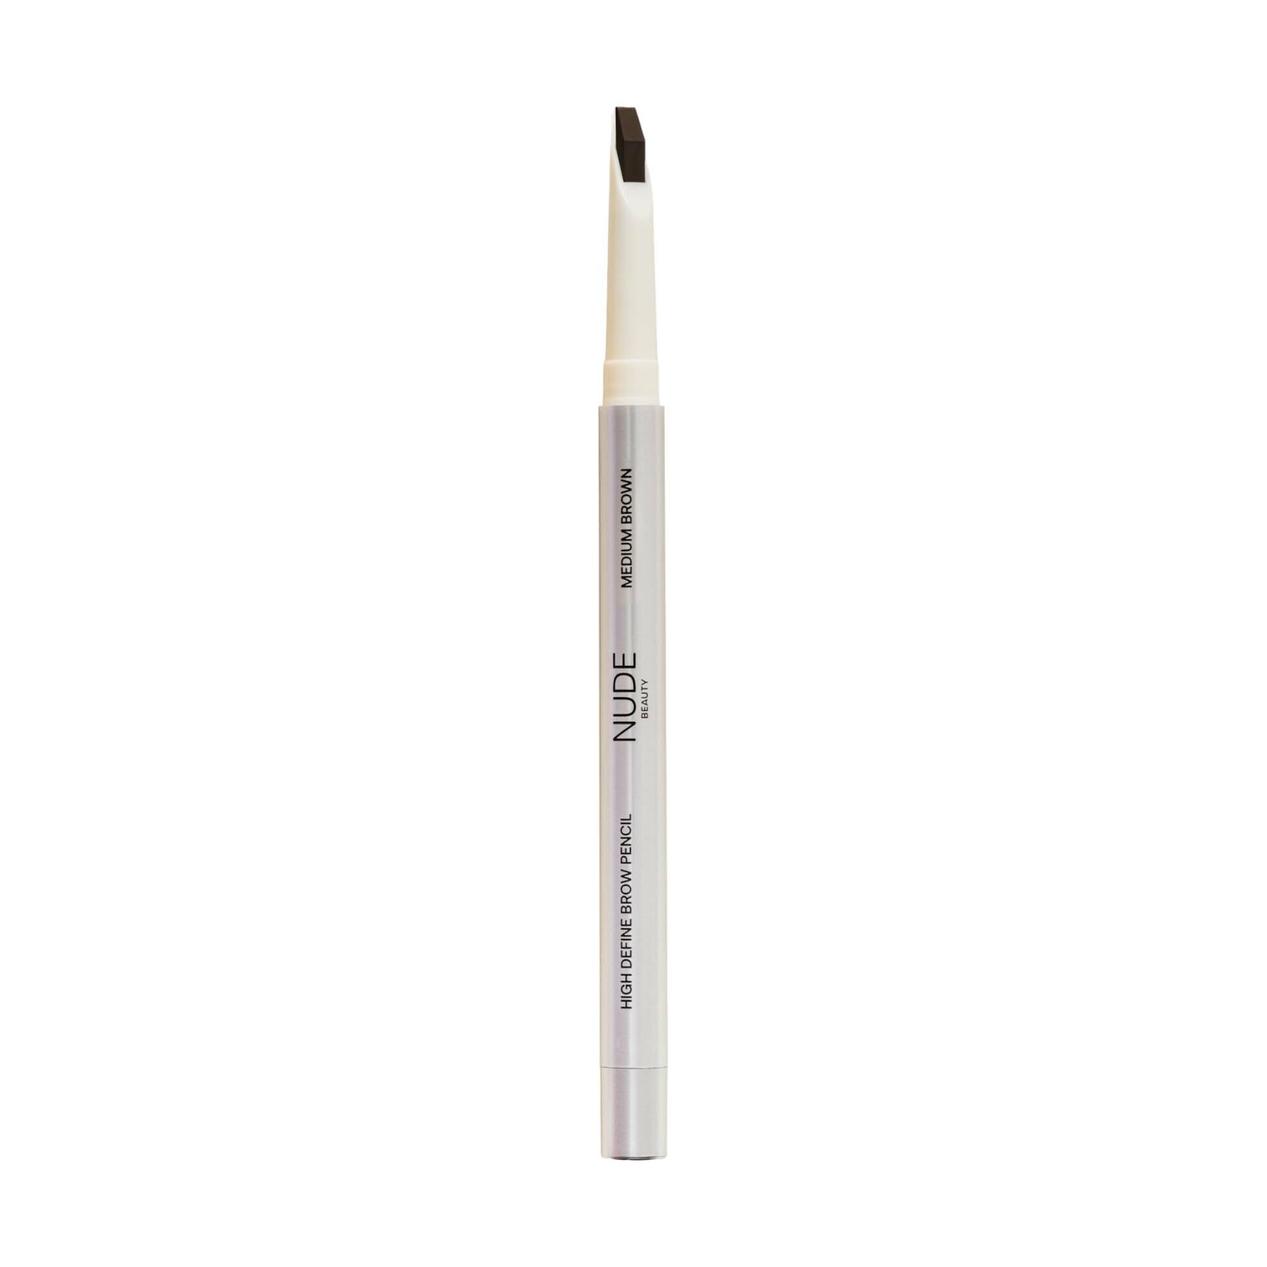 Tilbud: Nude Beauty High Define Brow Pencil Medium Brown kr 249 på VITA